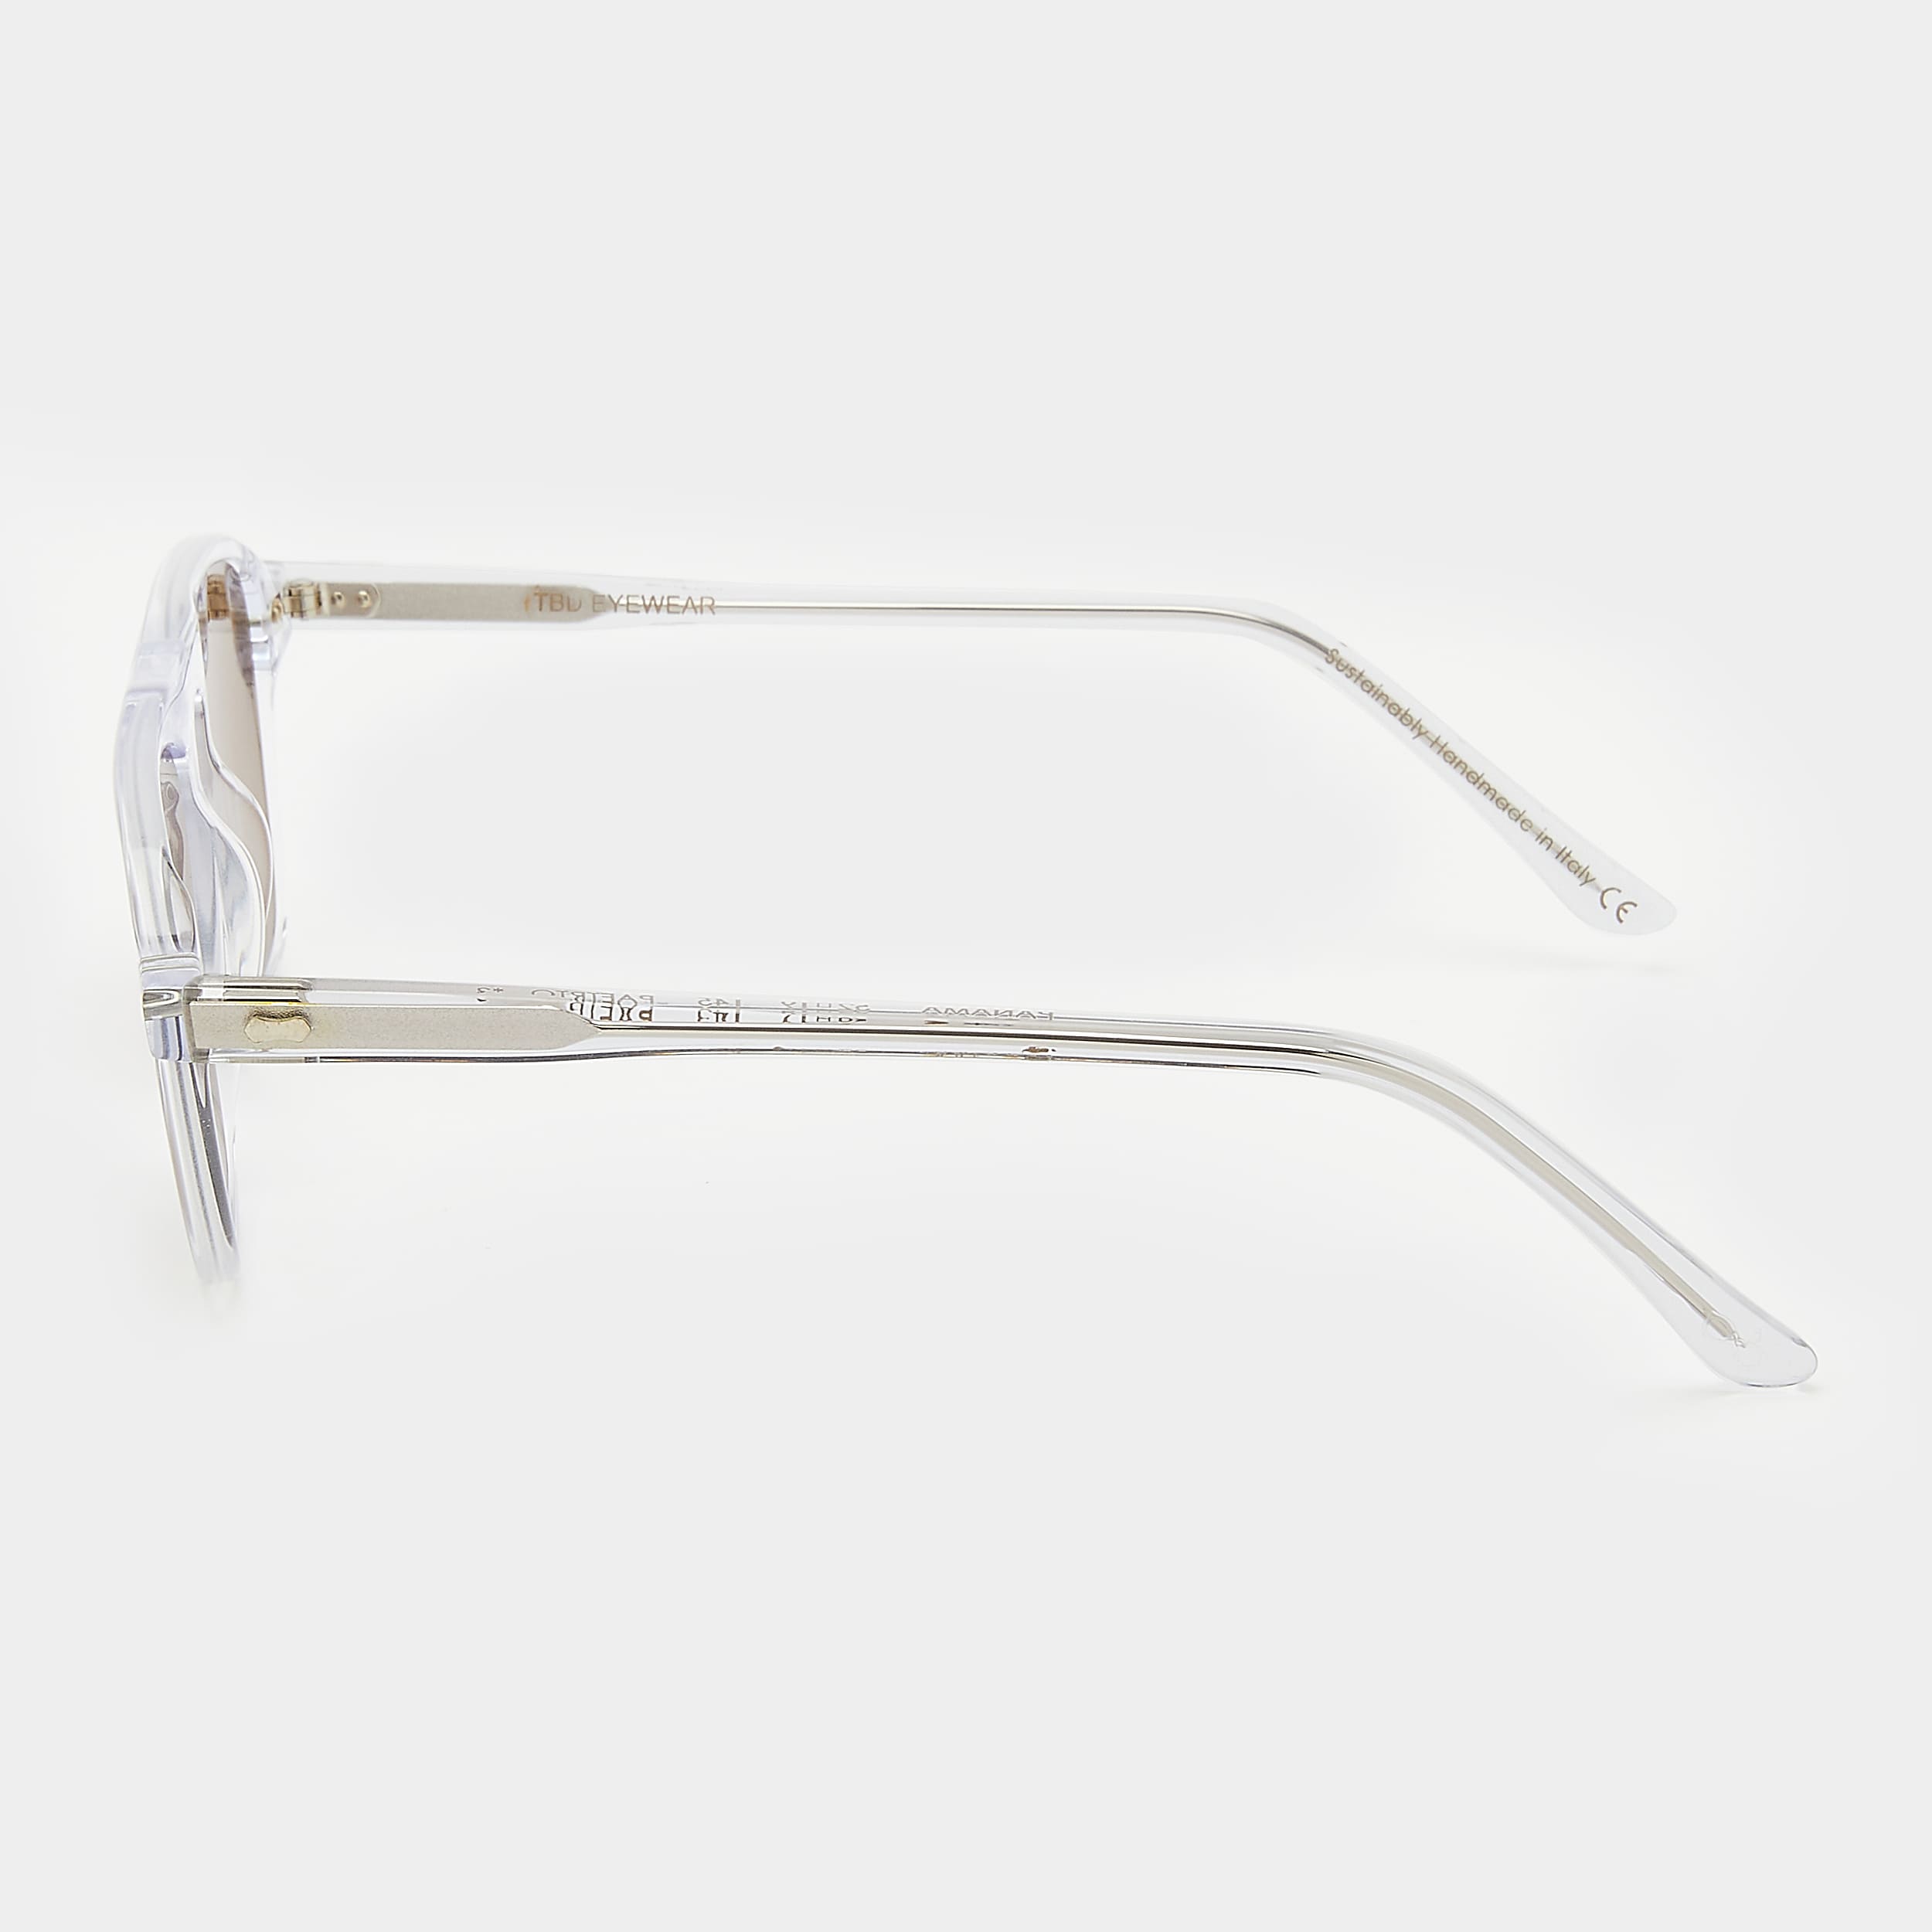 sunglasses-panama-eco-transparent-tobacco-sustainable-tbd-eyewear-lateral